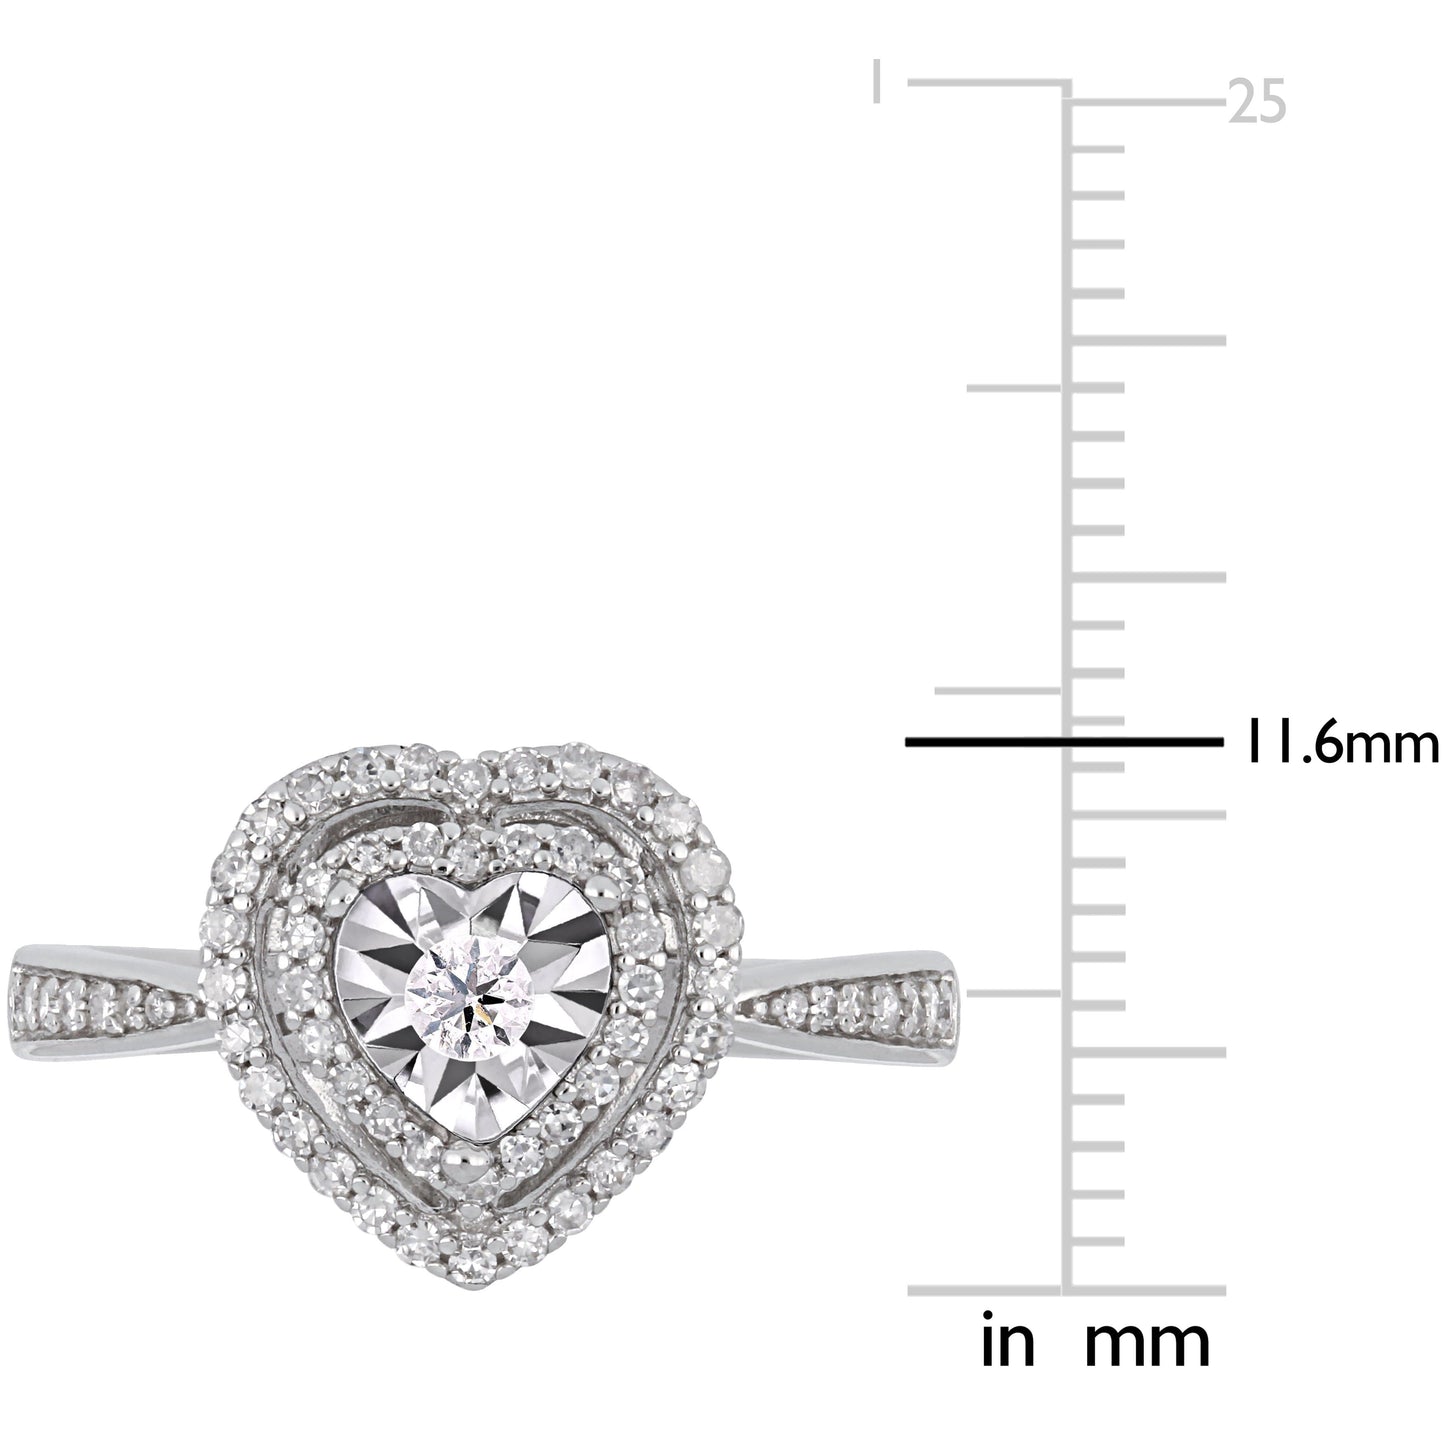 Julie Leah Heart Diamond Ring in Sterling Silver